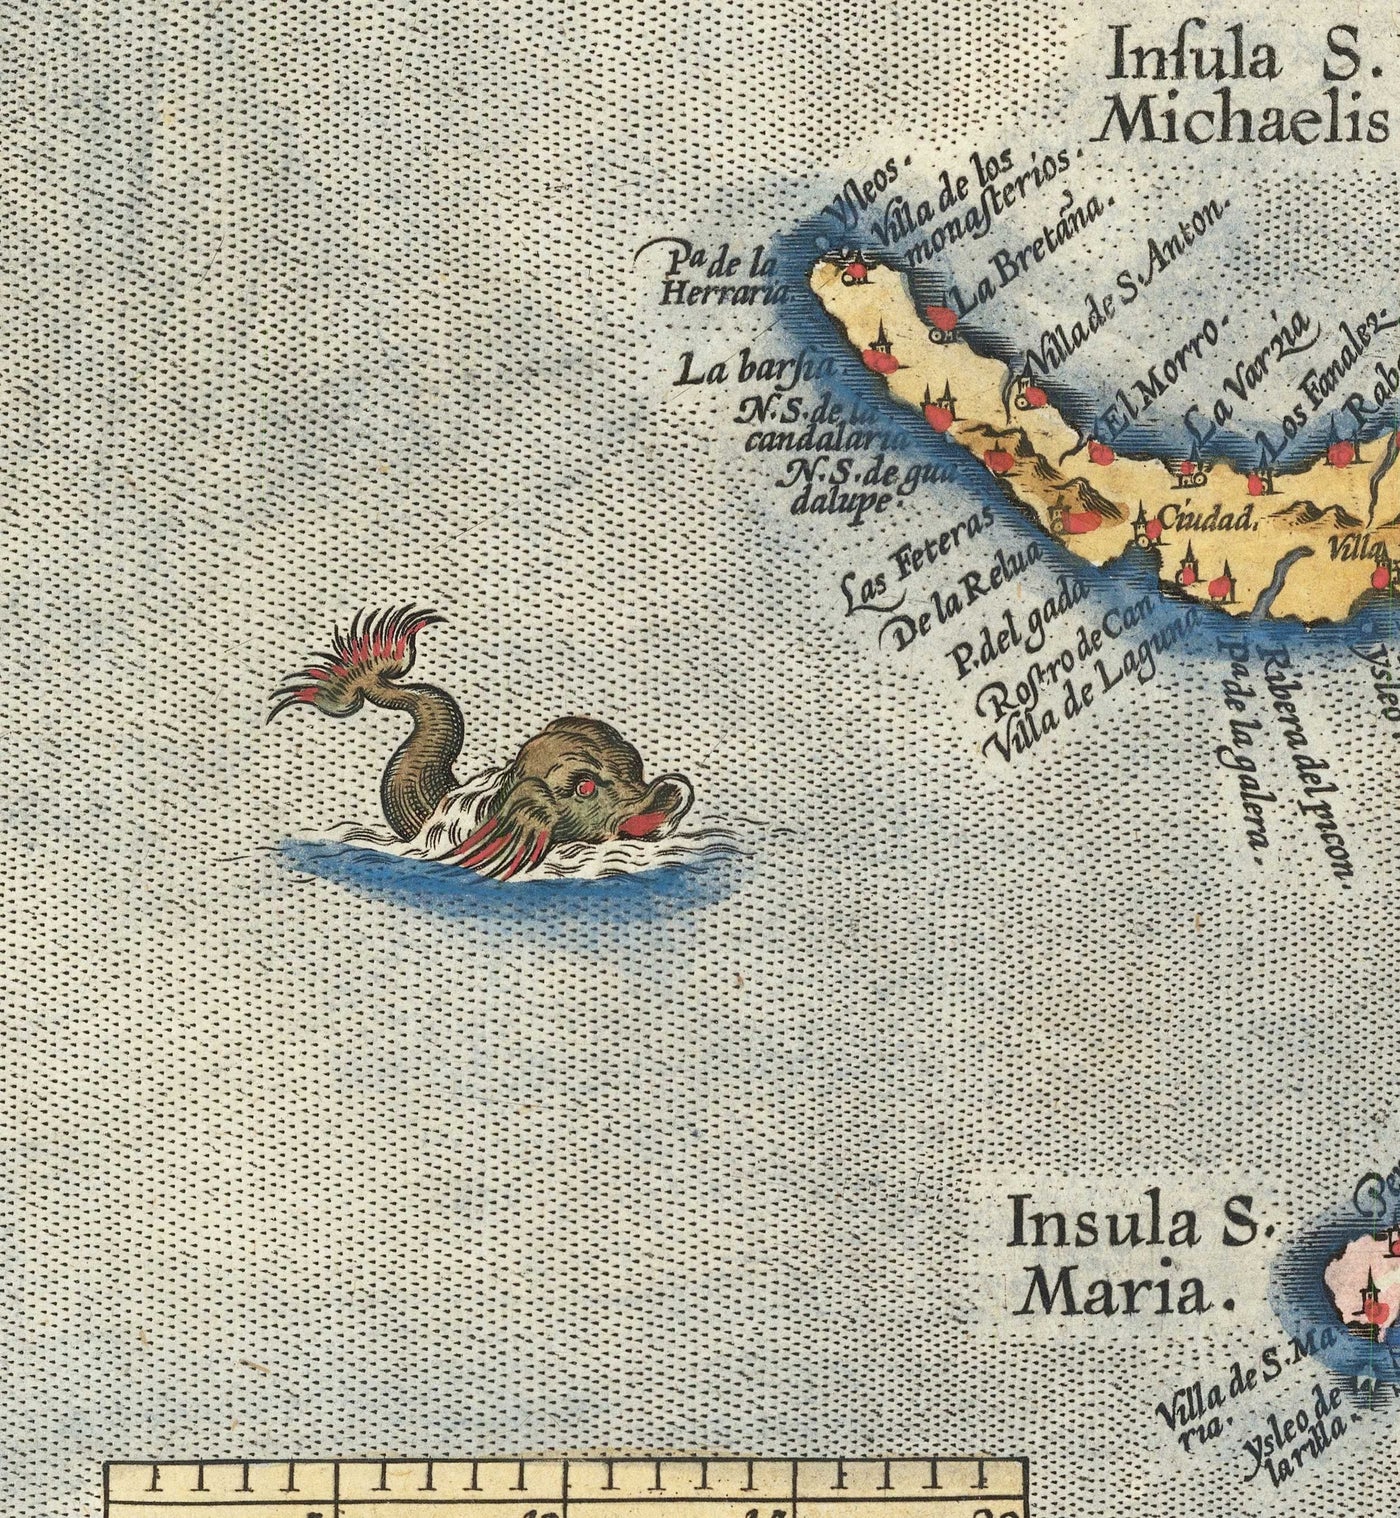 Old Map of The Azores by Abraham Ortelius, 1573 - Sao Miguel, Pico, Terceira, São Jorge, Faial, Portugal, Atlantic